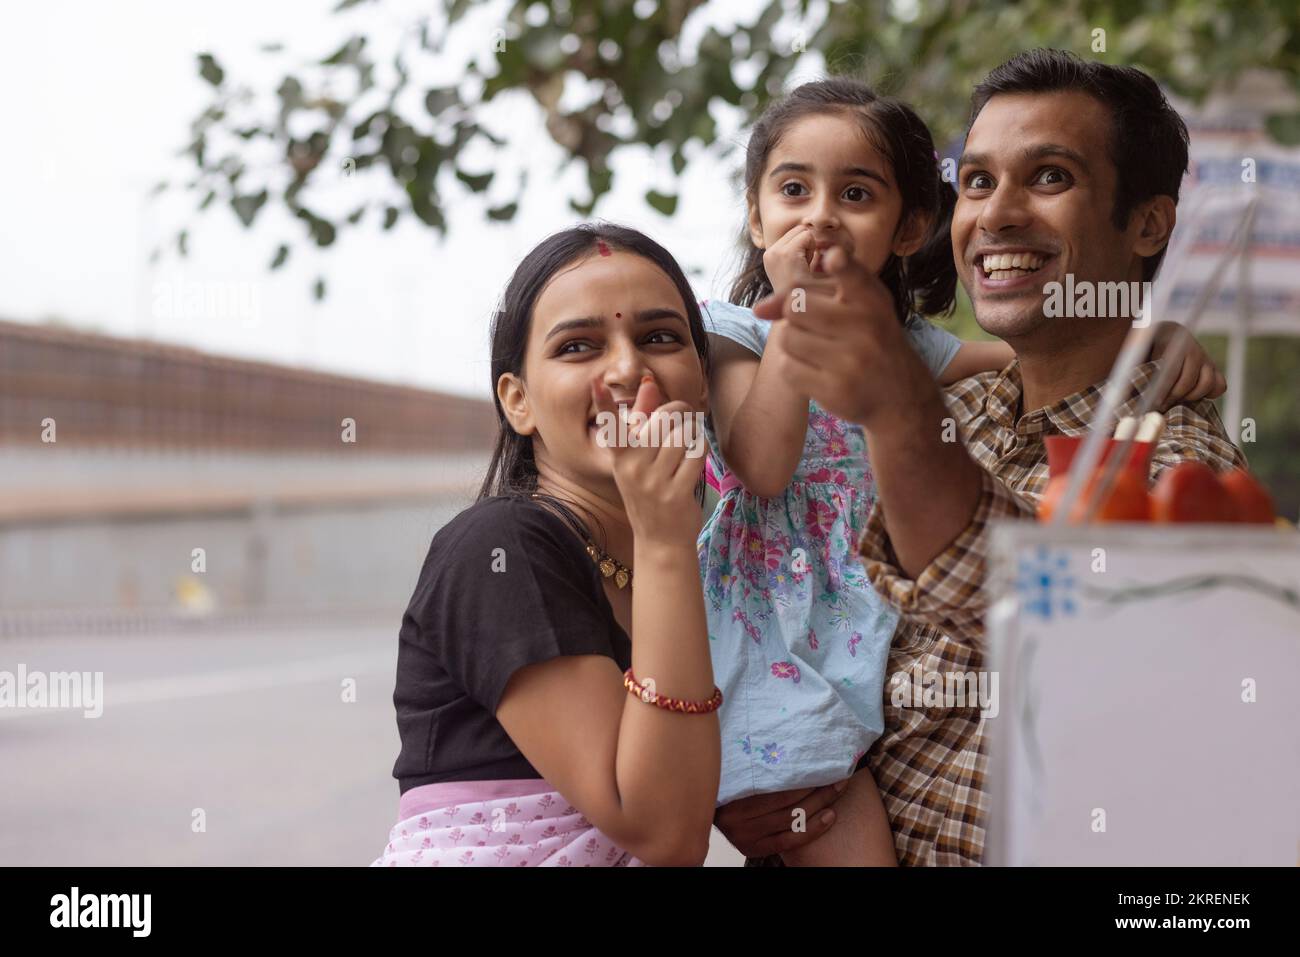 Portrait of happy family standing near street shop Stock Photo